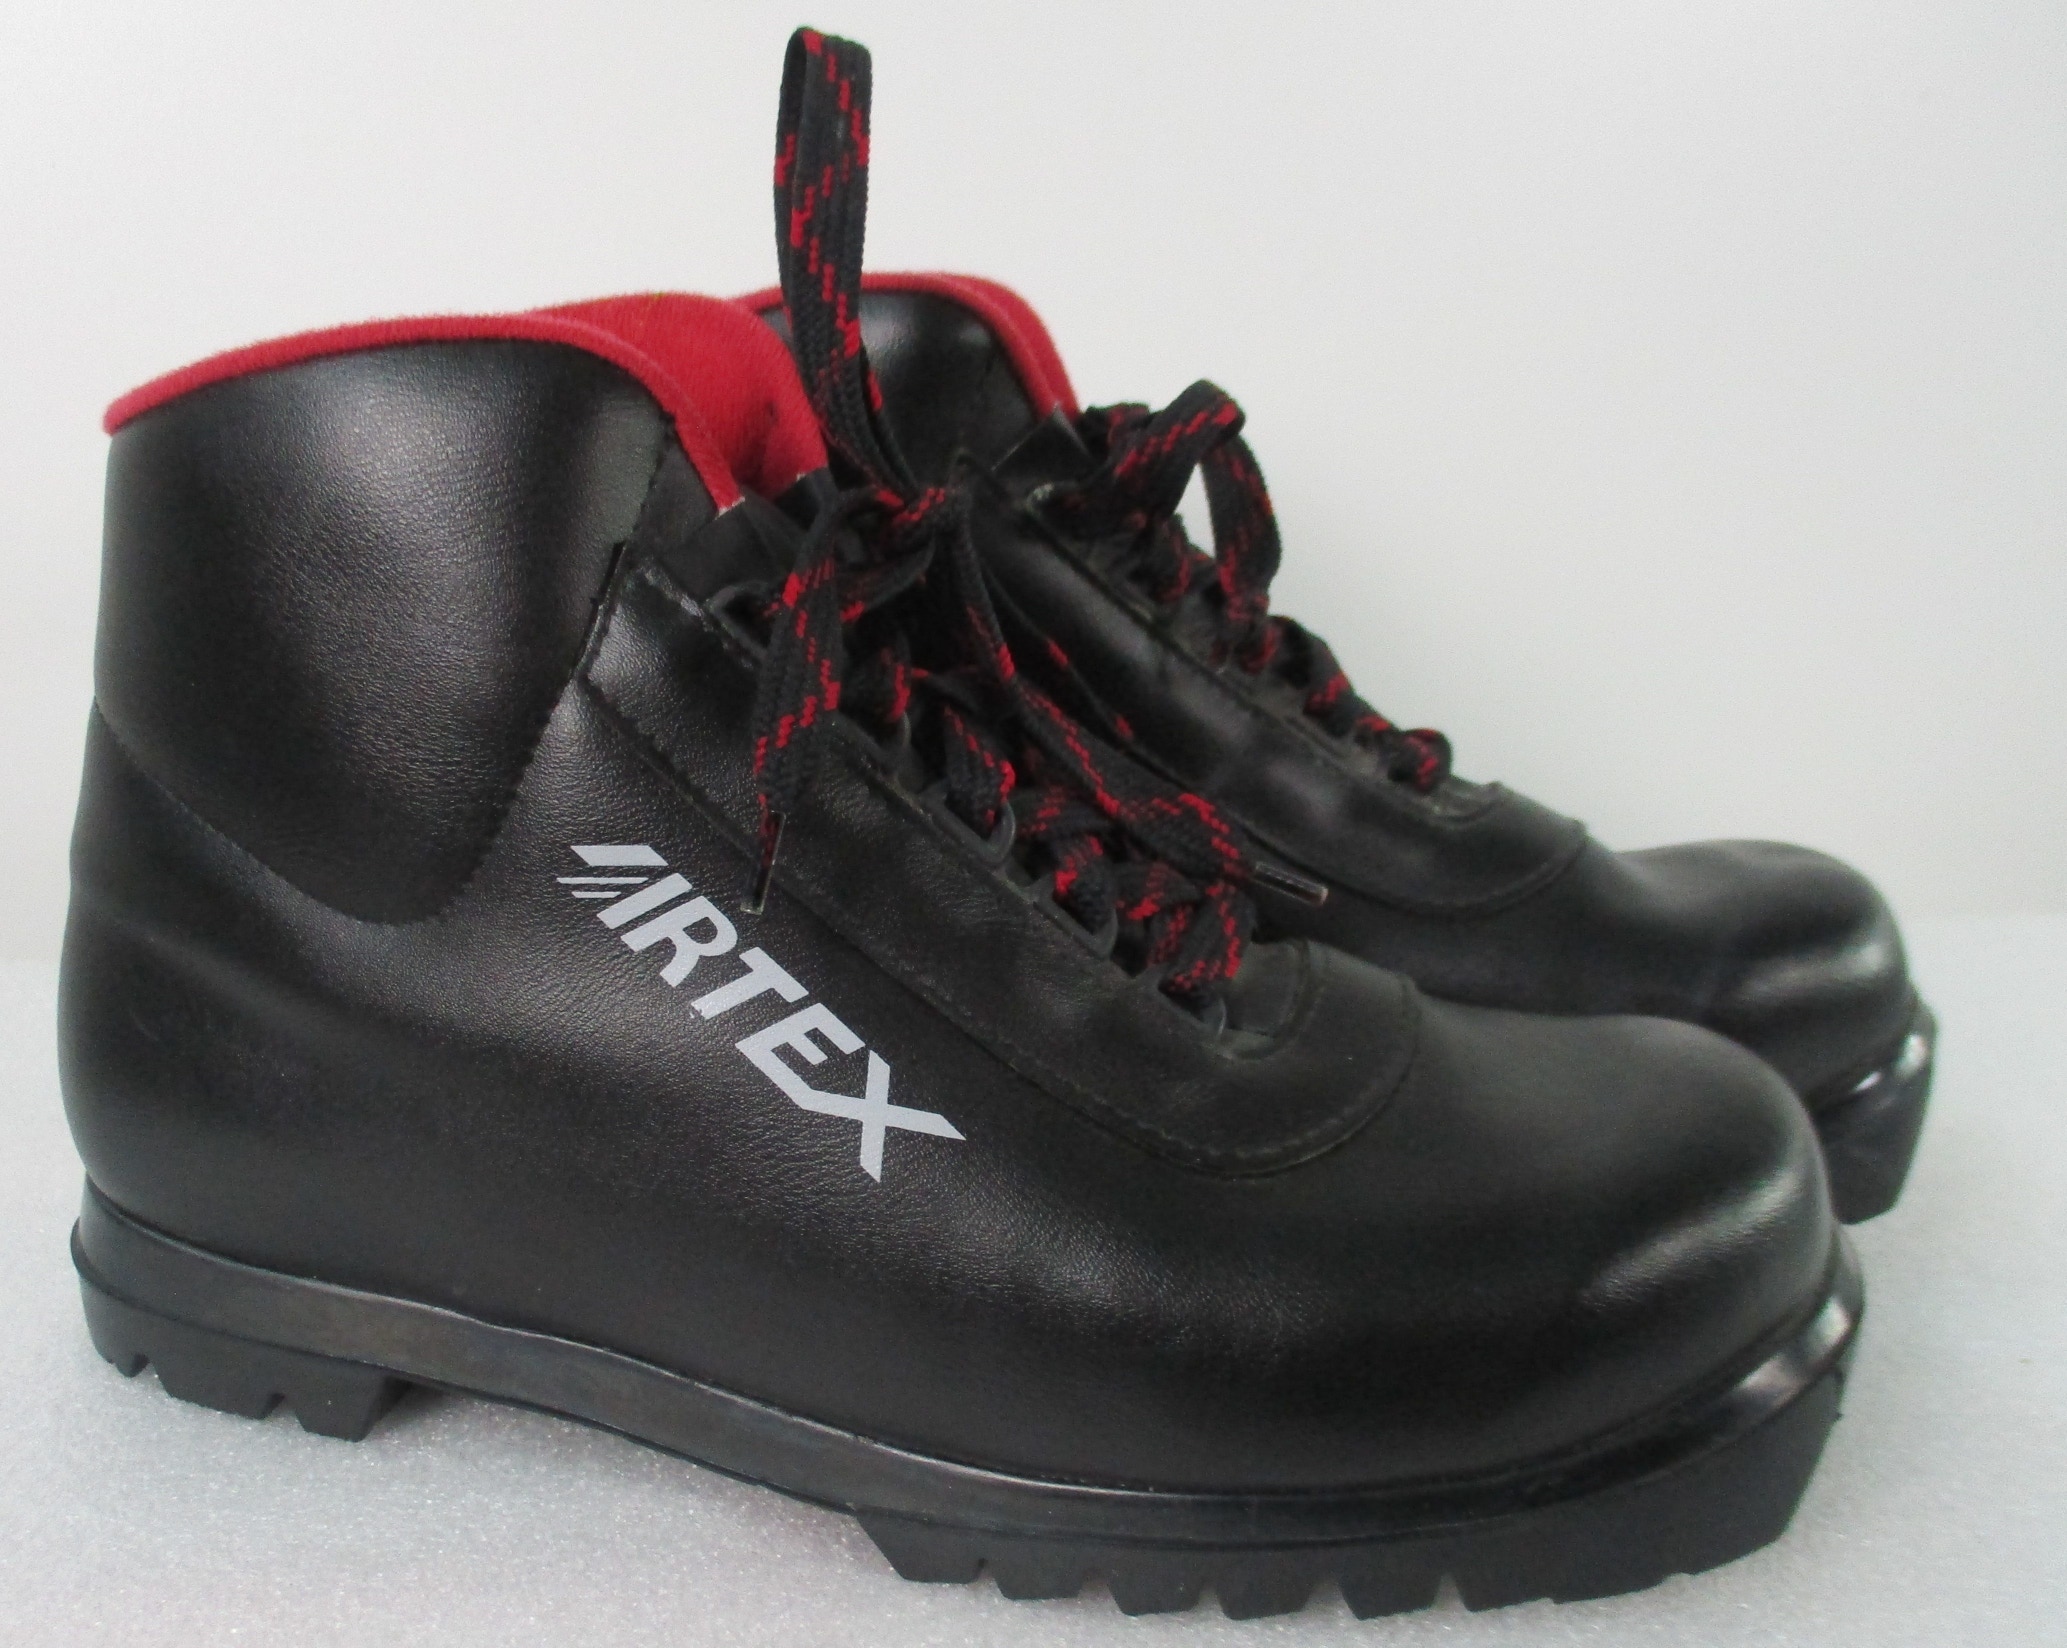 New Artex Black/Red NNN Cross Country Ski Boots